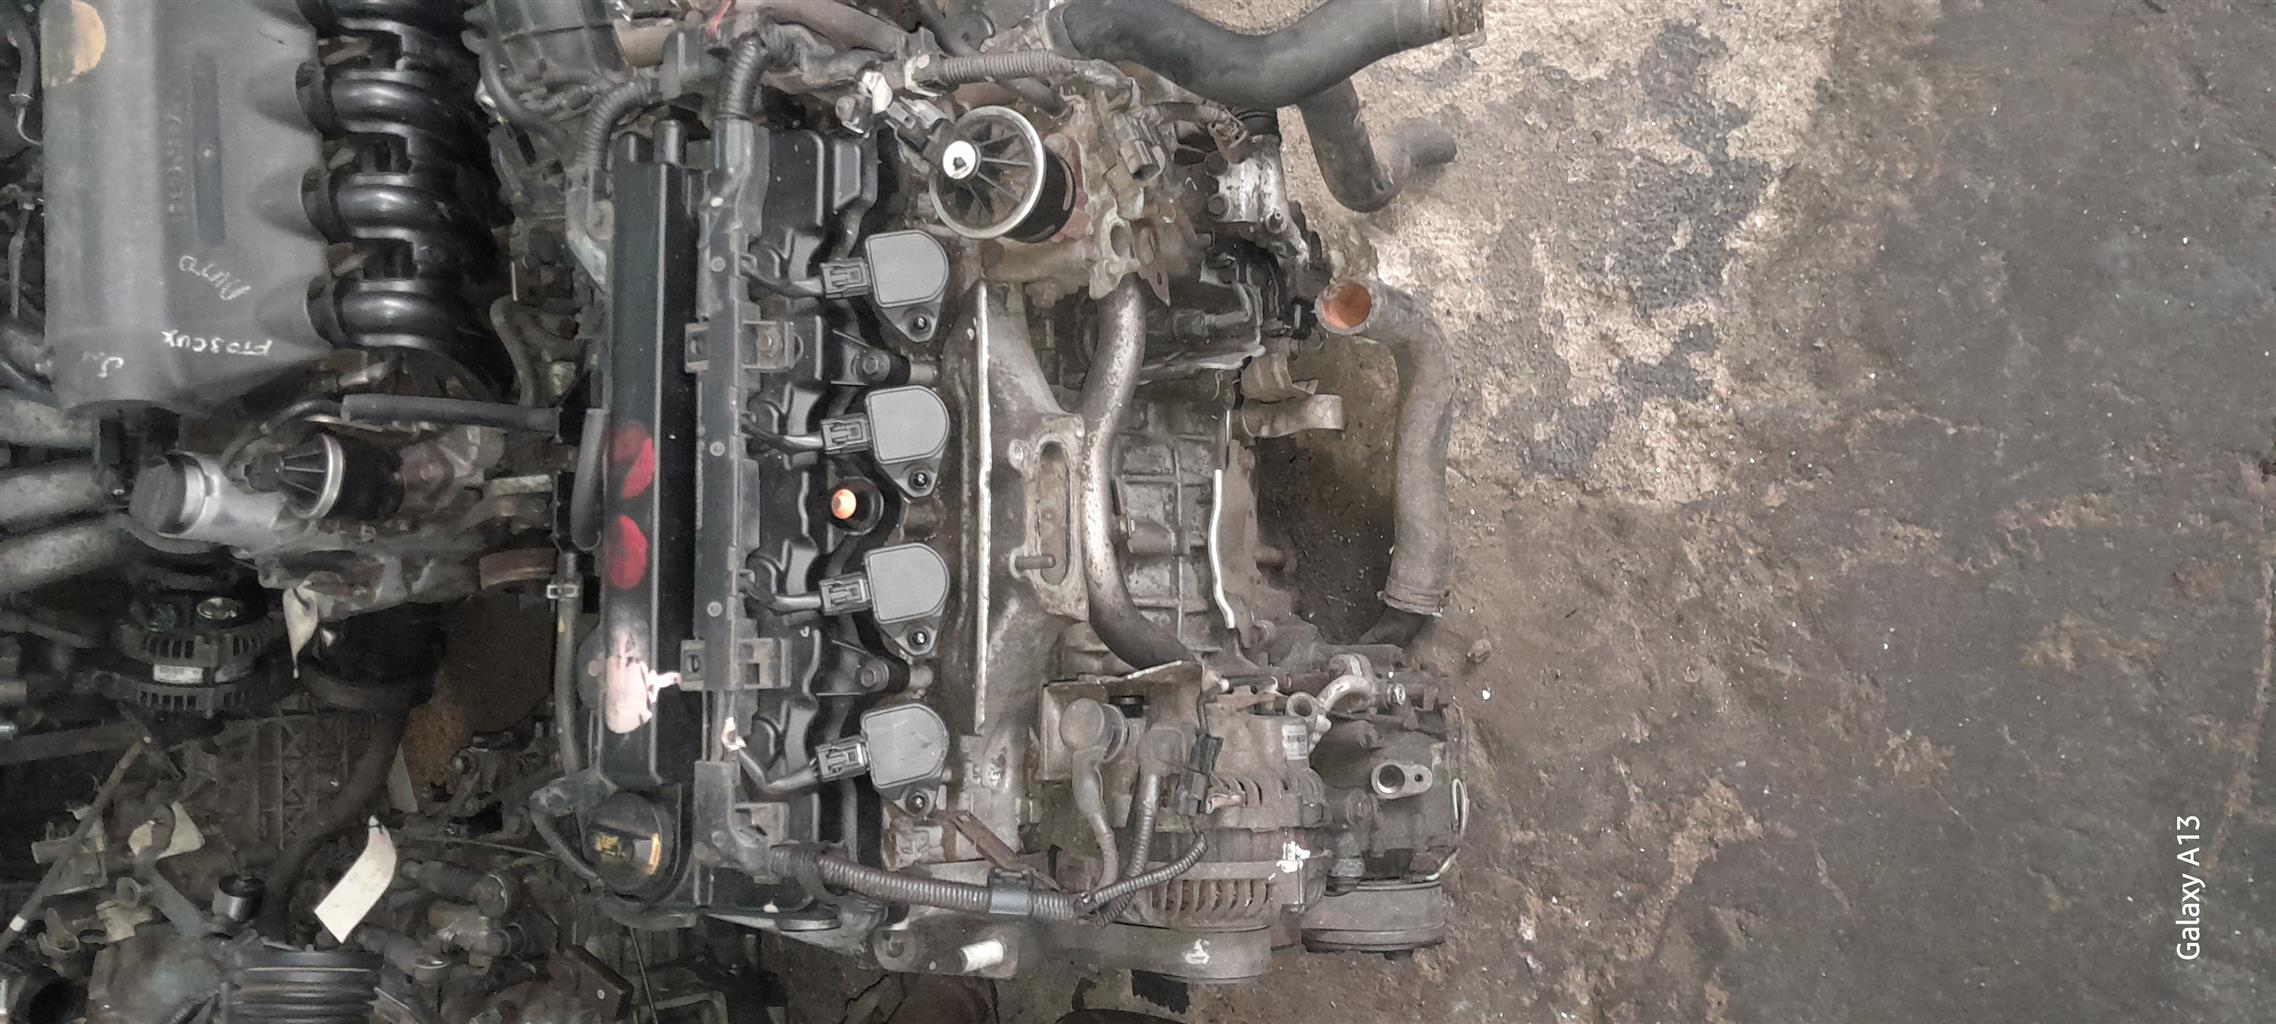 Honda Civic 1.8 R18A1 engine for sale